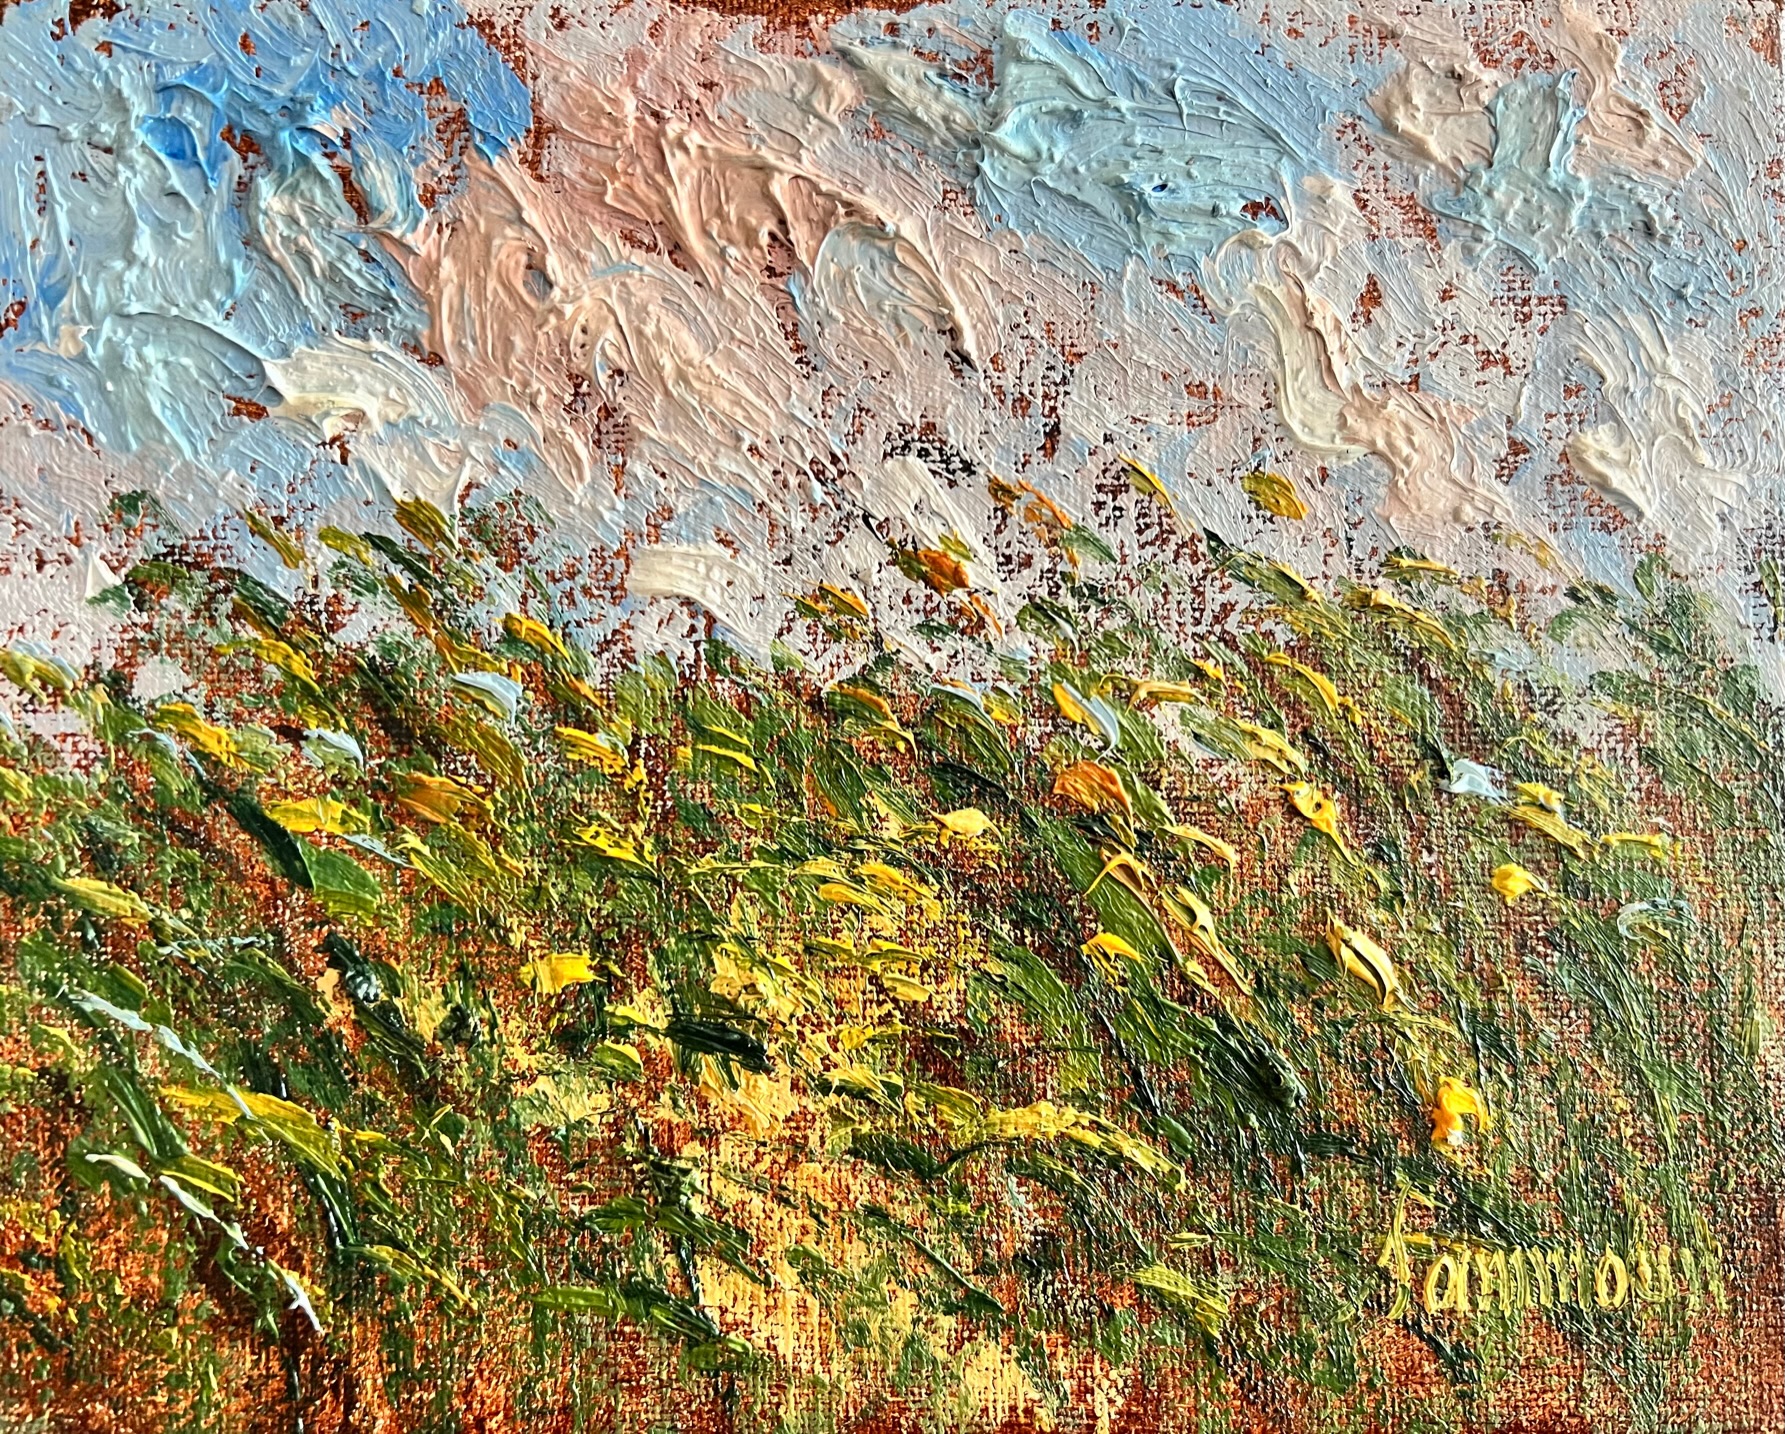 SAMIR SAMMOUN - Green Wheat Field - Oil on Canvas - 8x10 inches